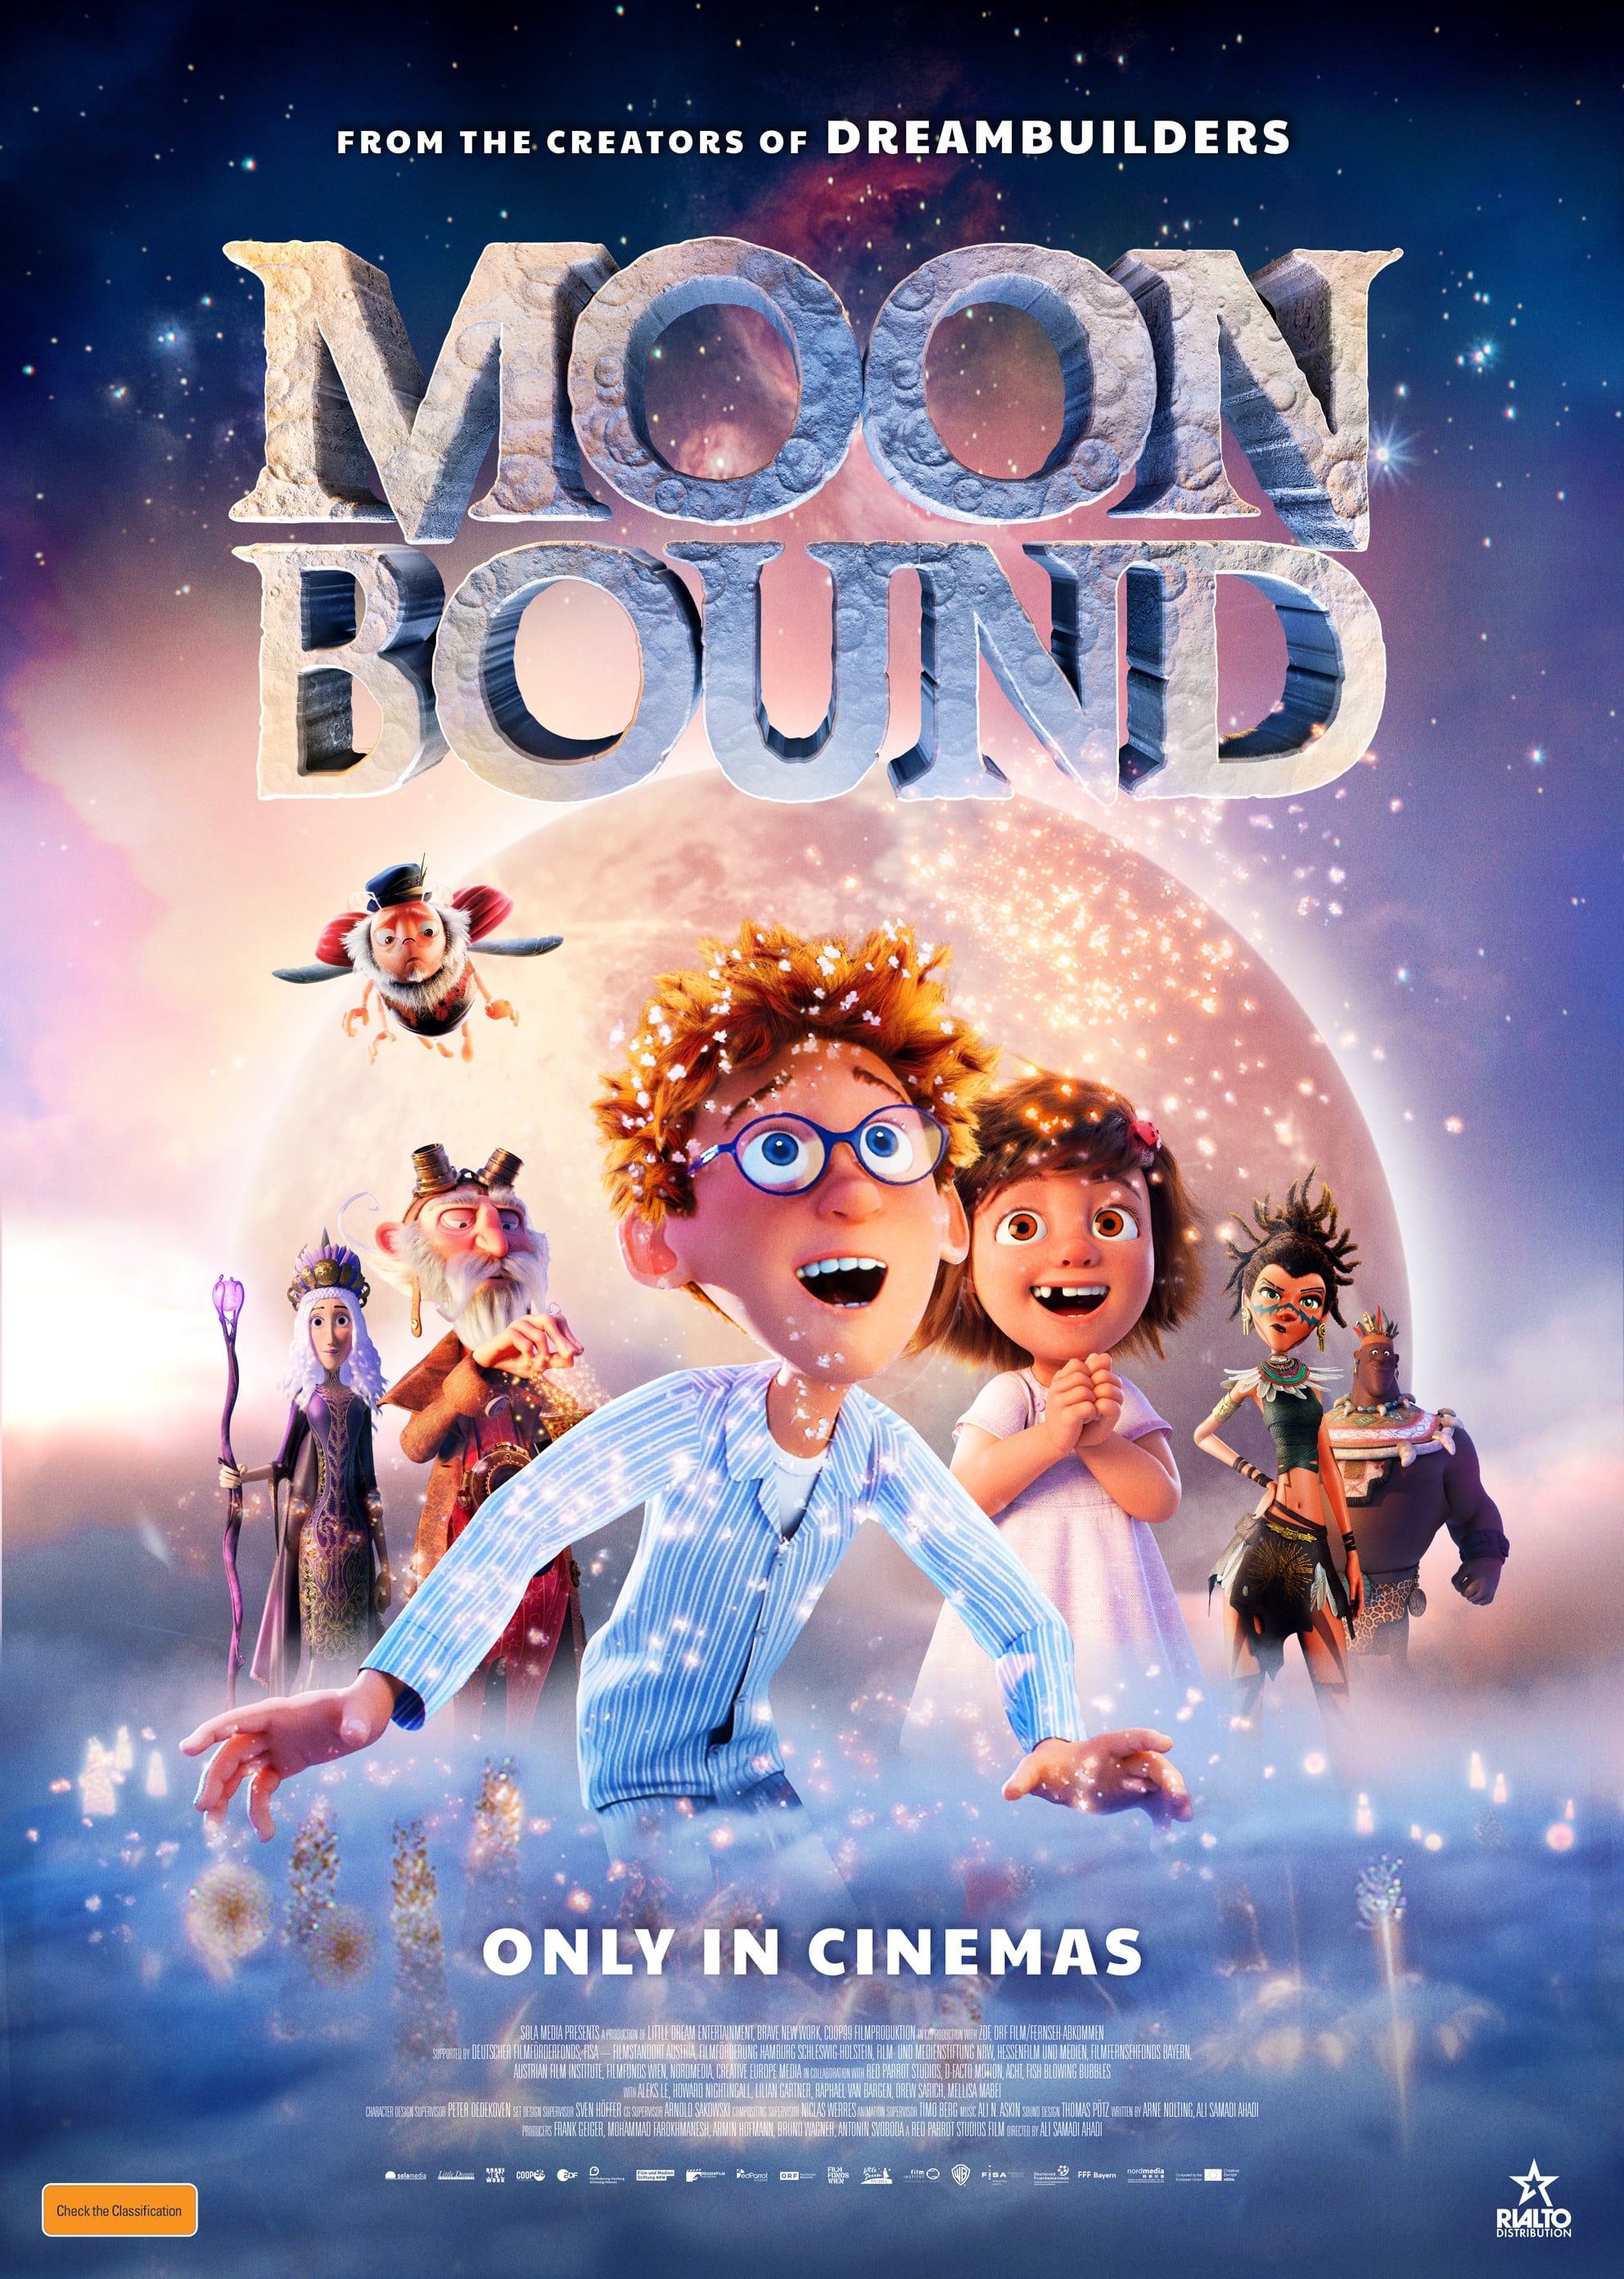 moonbound movie review